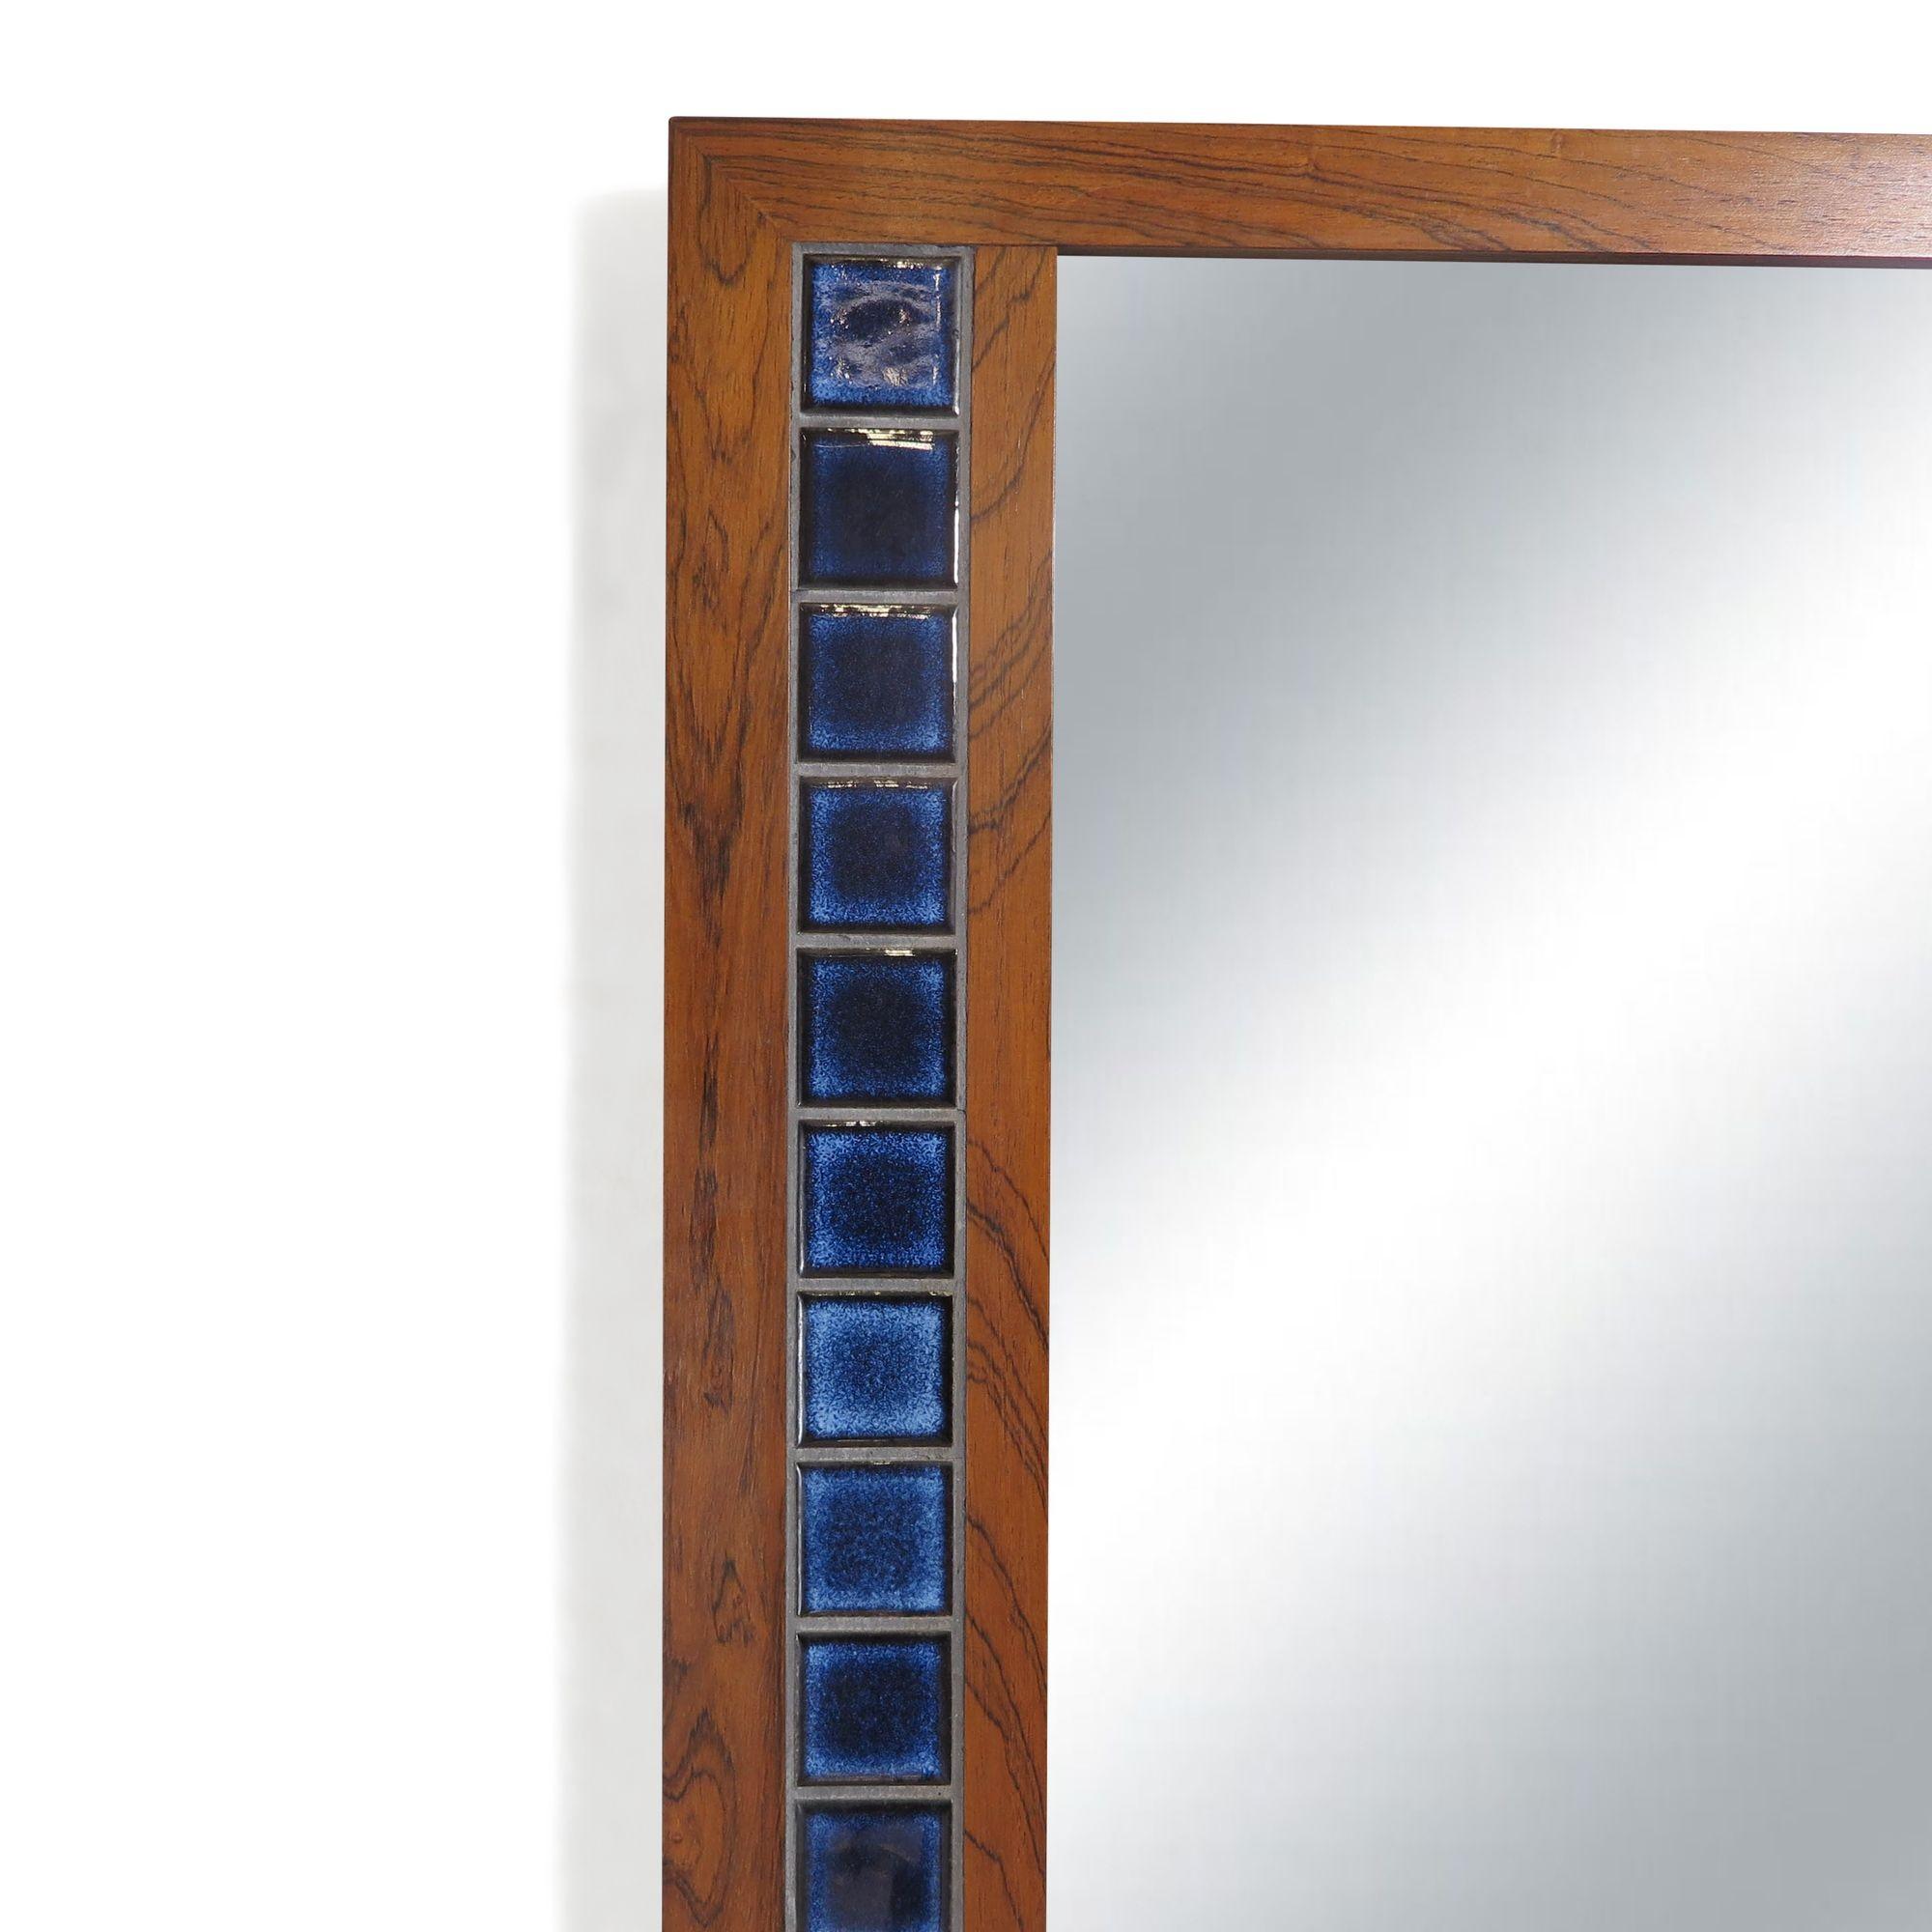 Mid-century Danish rectangular mirror with blue ceramic tiles.
Measurements
W 23'' x D 0,75'' x H 45,25''